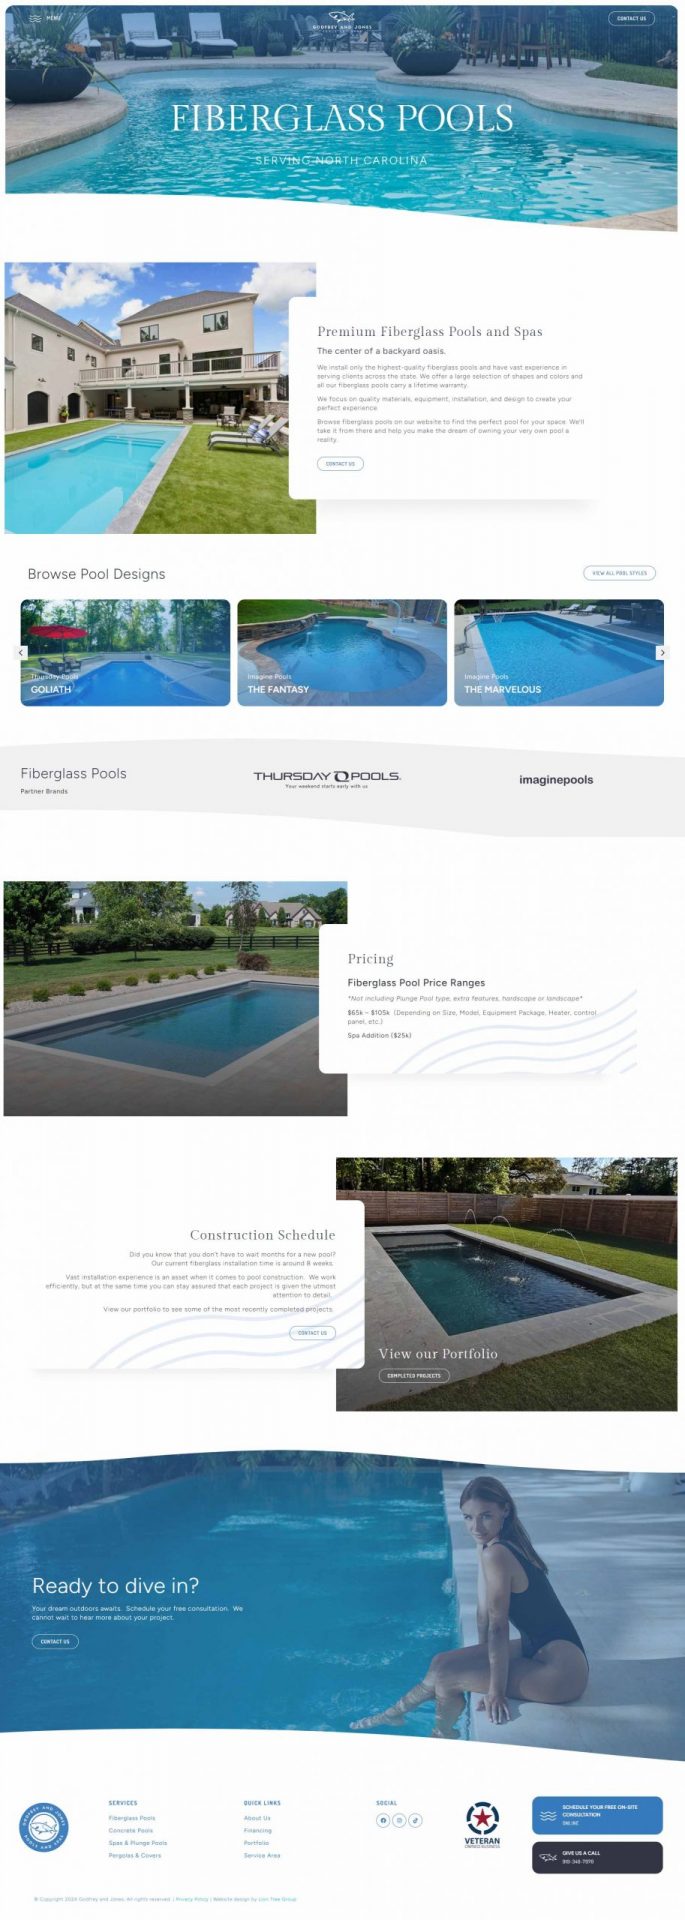 Godfrey and Jones fiberglass pools web page